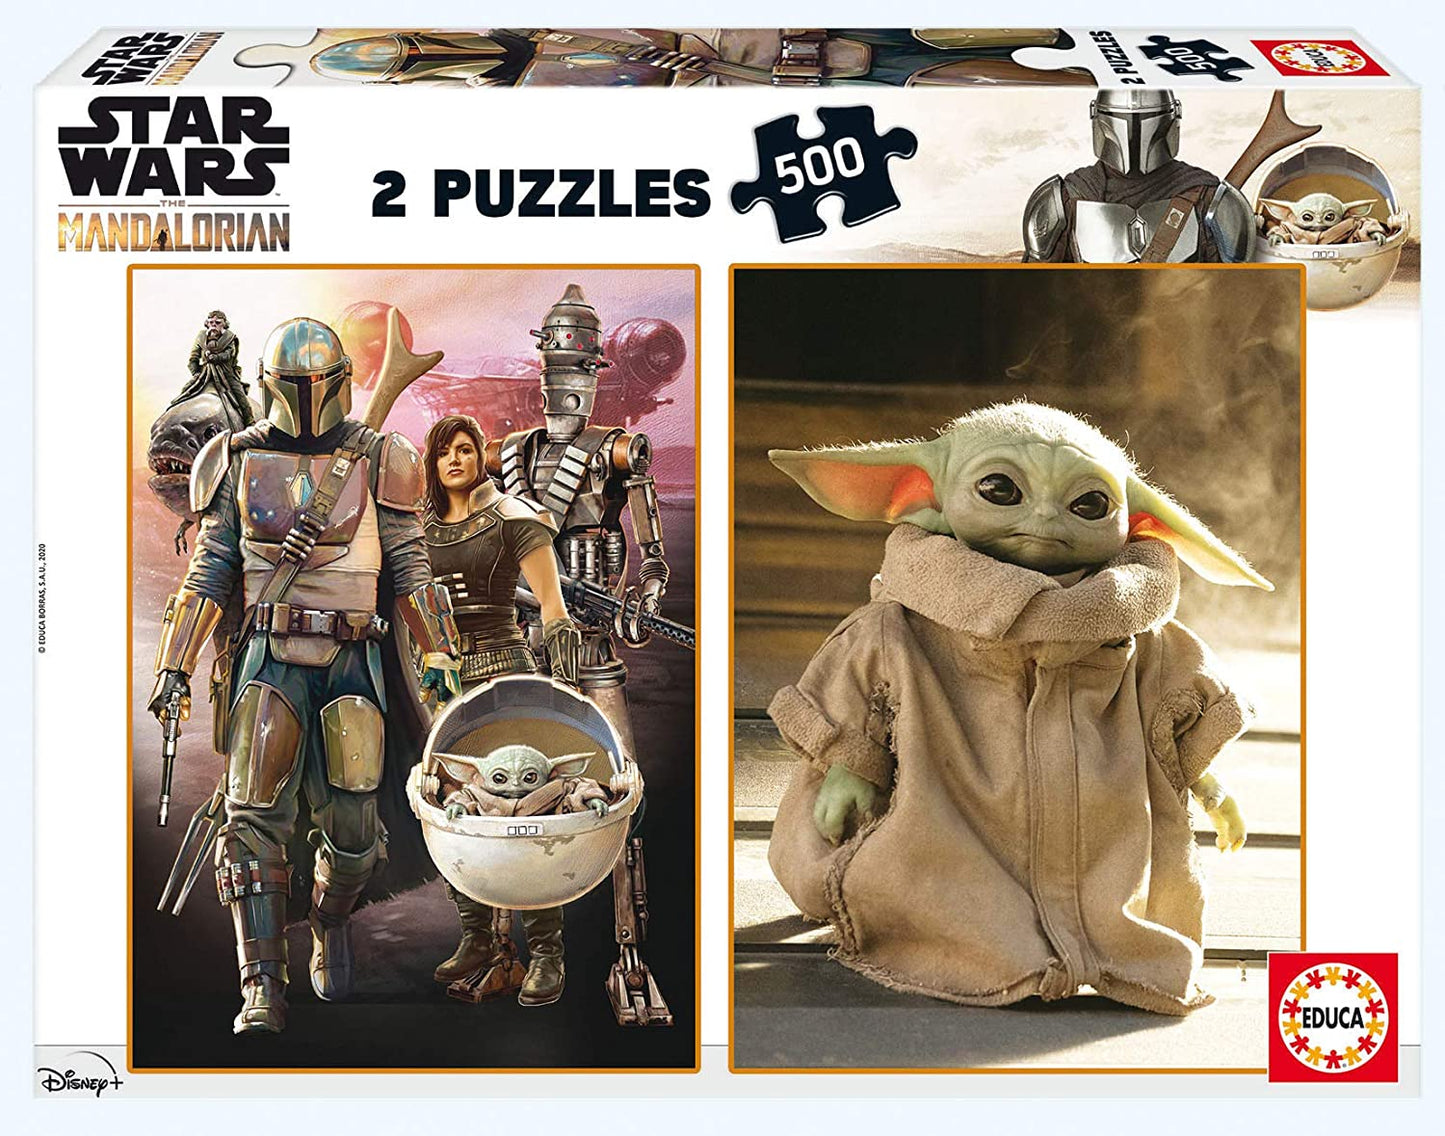 Star Wars The Mandalorian, 2 - 500 Piece puzzle set